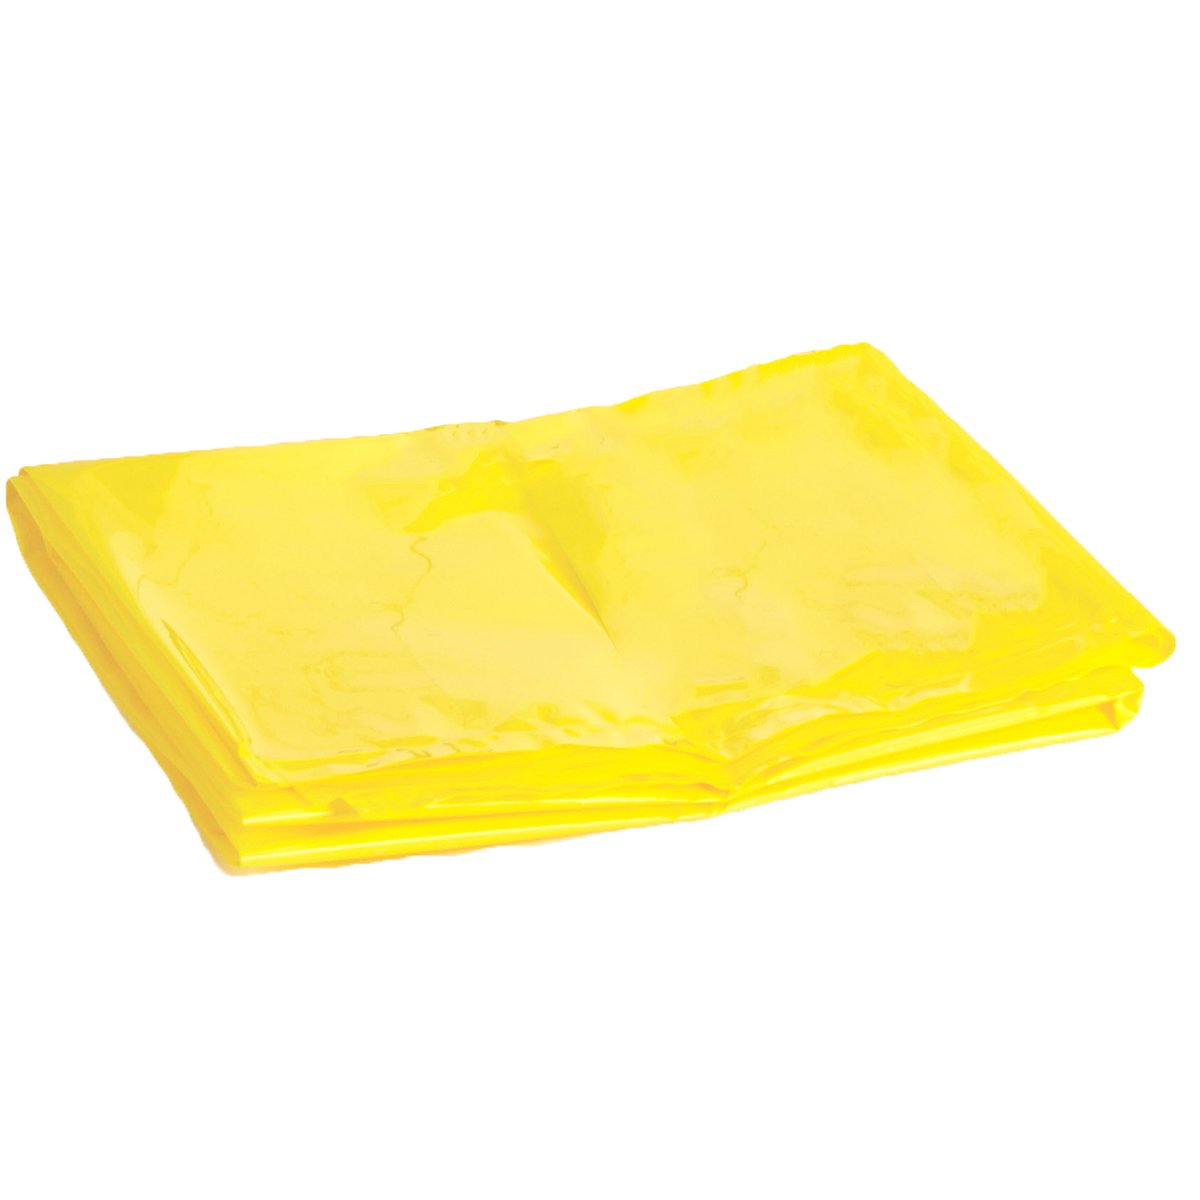 Pack of 25 27cm x 46cm Yellow Biohazard Disposal Bags